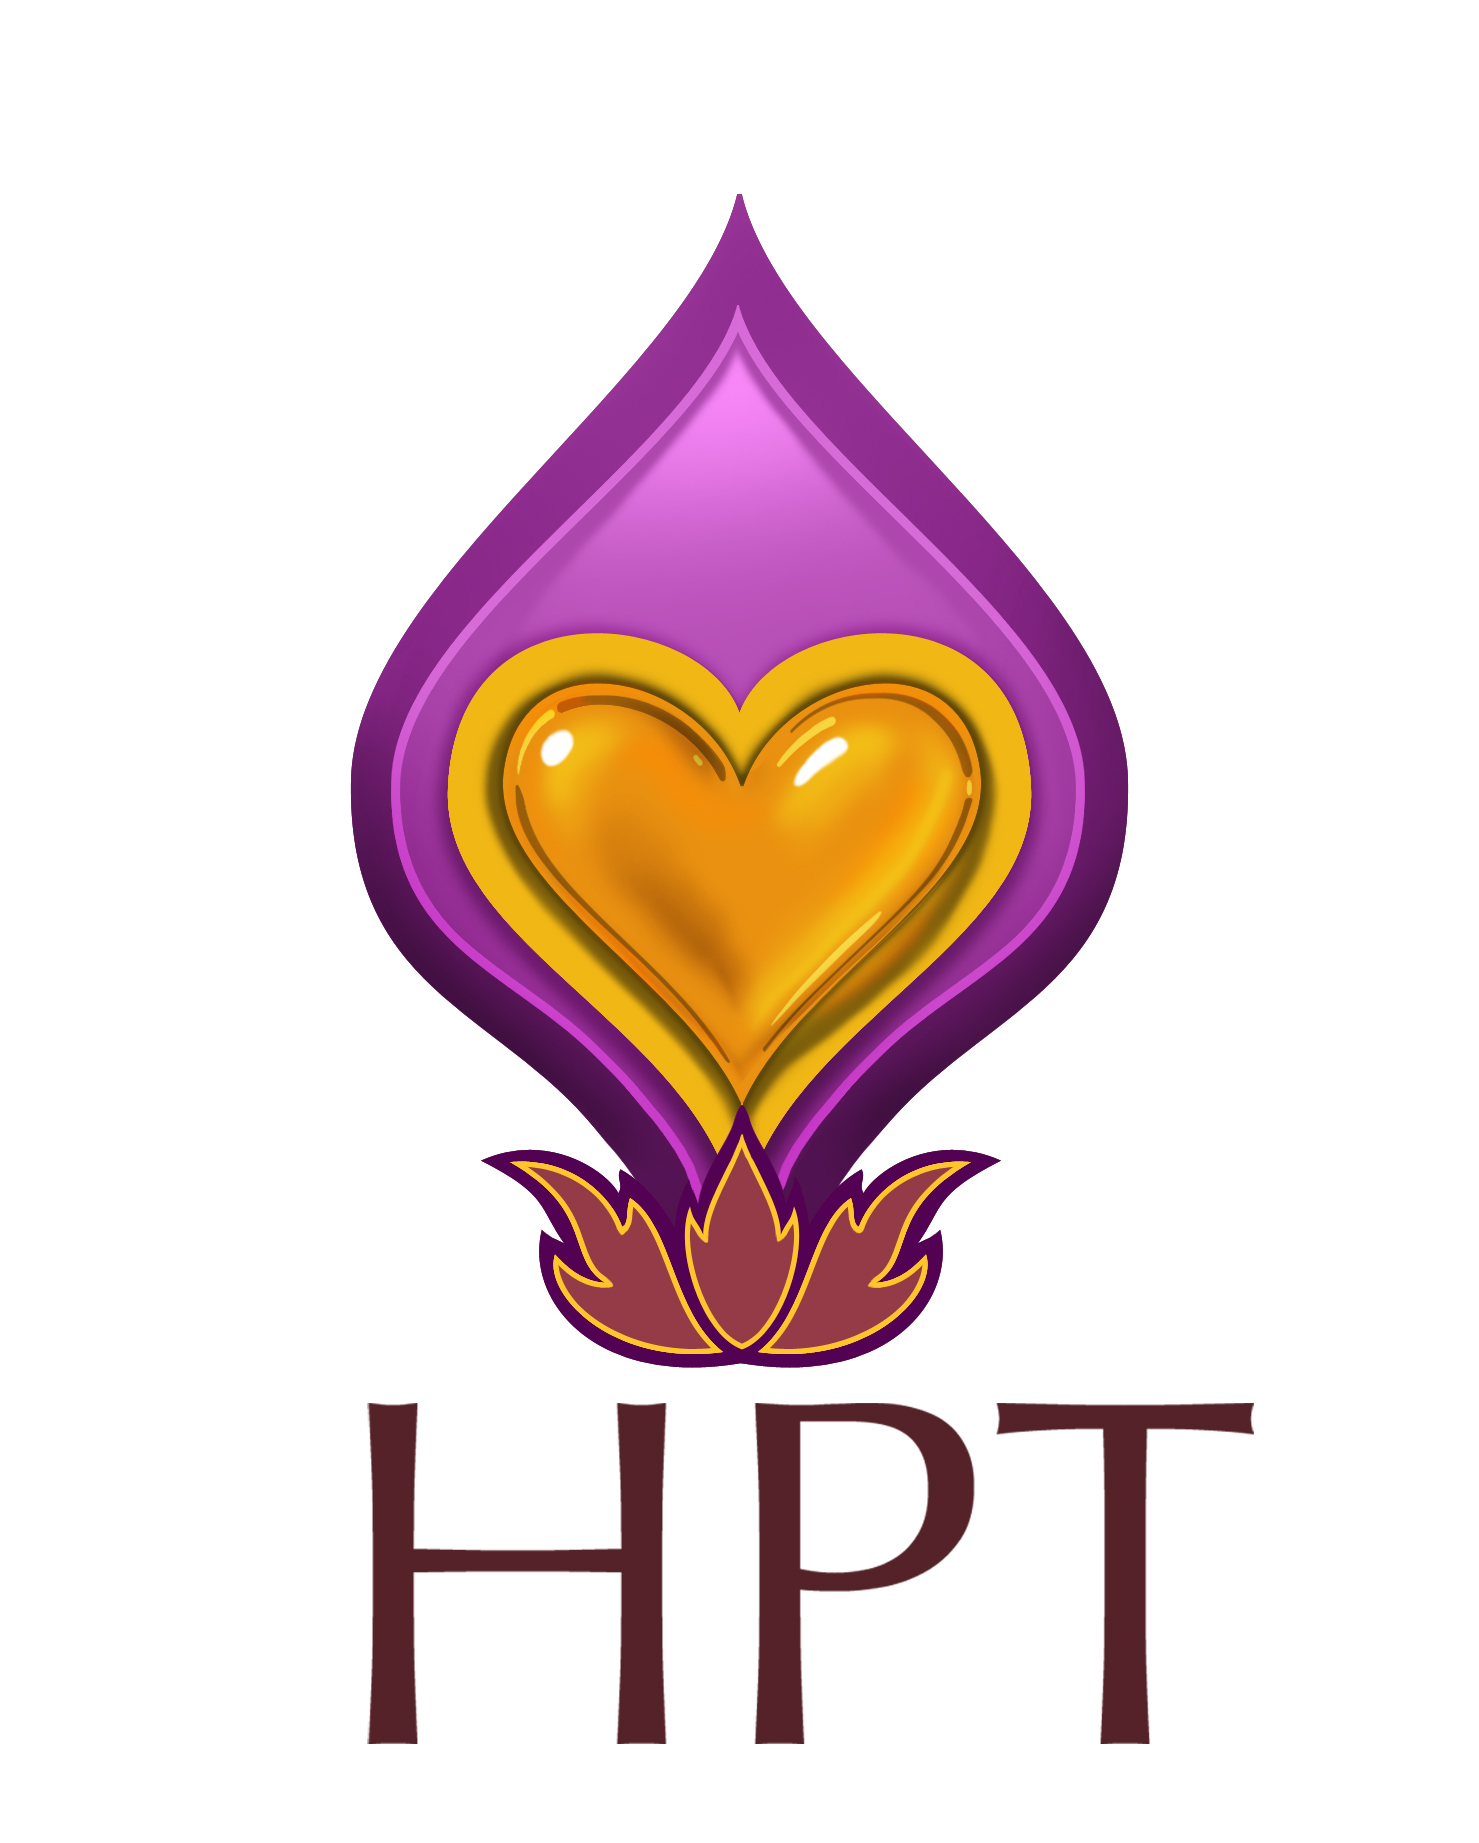 HPT logo | Rebecca Marina1479 x 1843